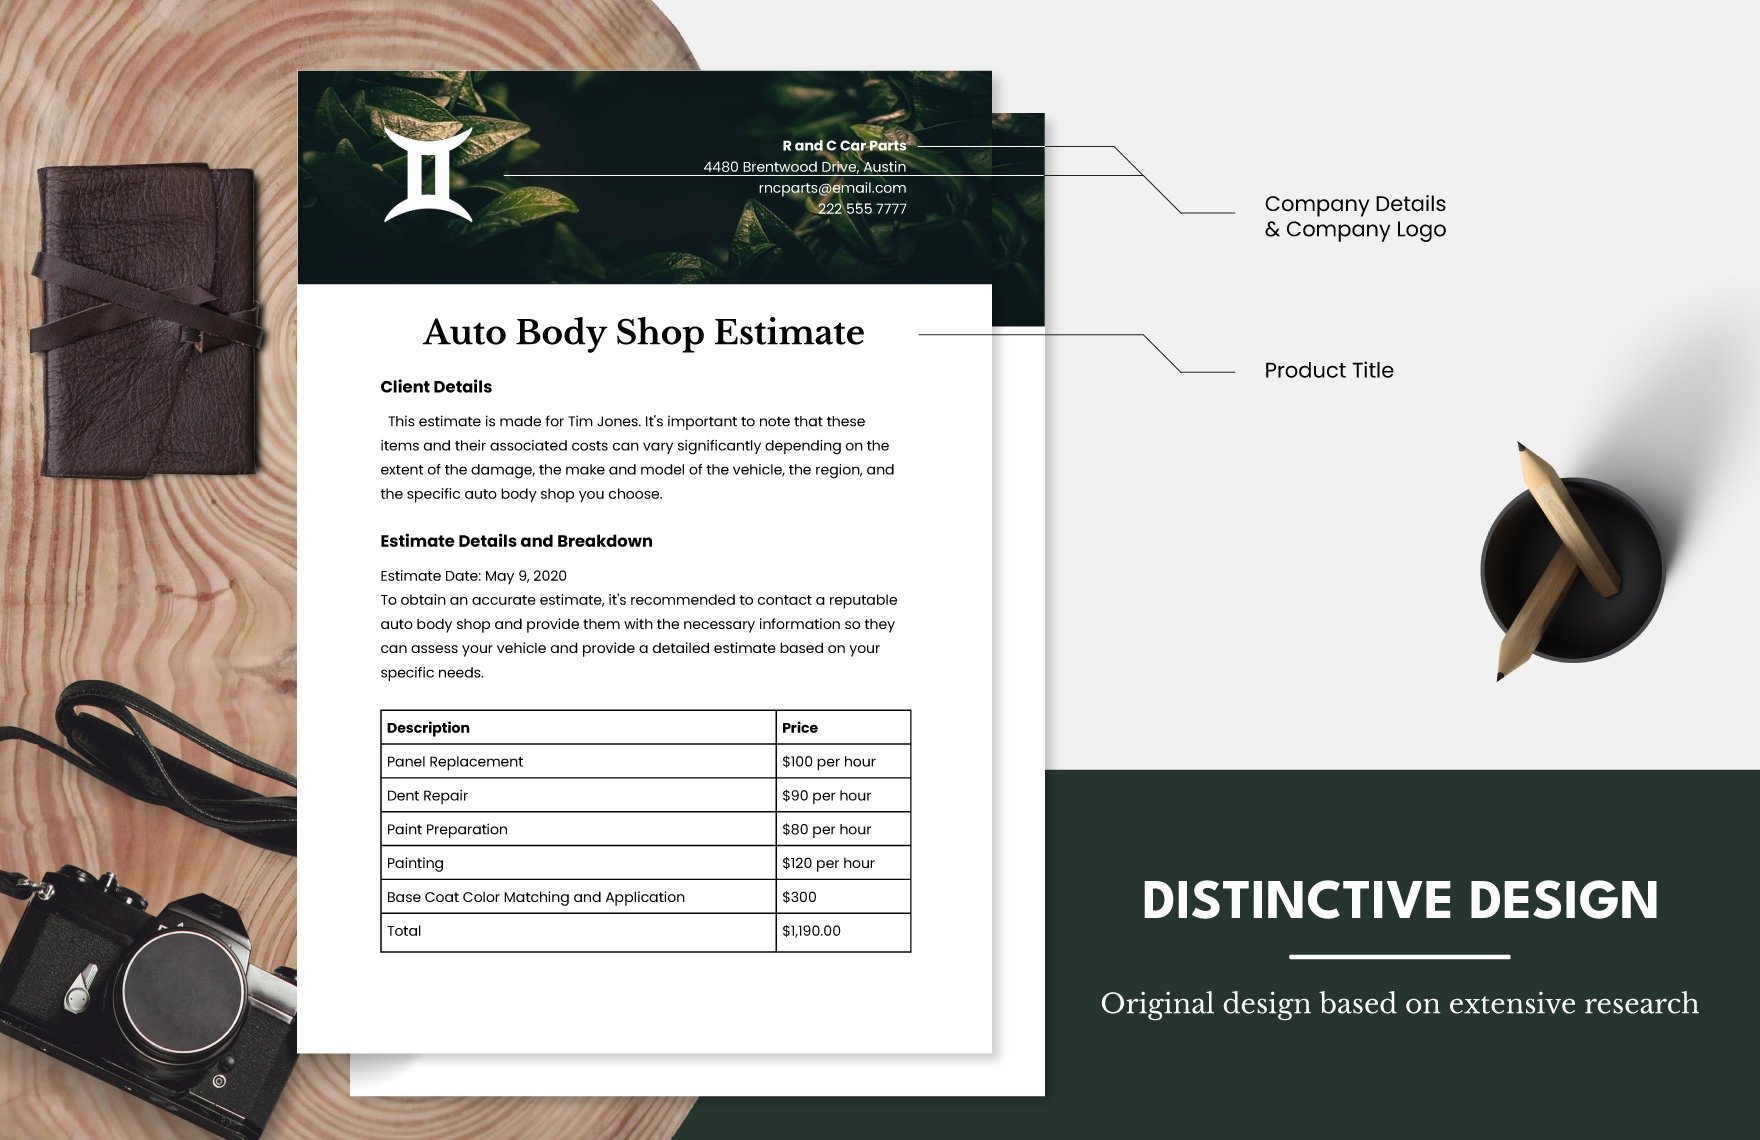 Auto Body Shop Estimate Template in Word PDF Google Docs Download